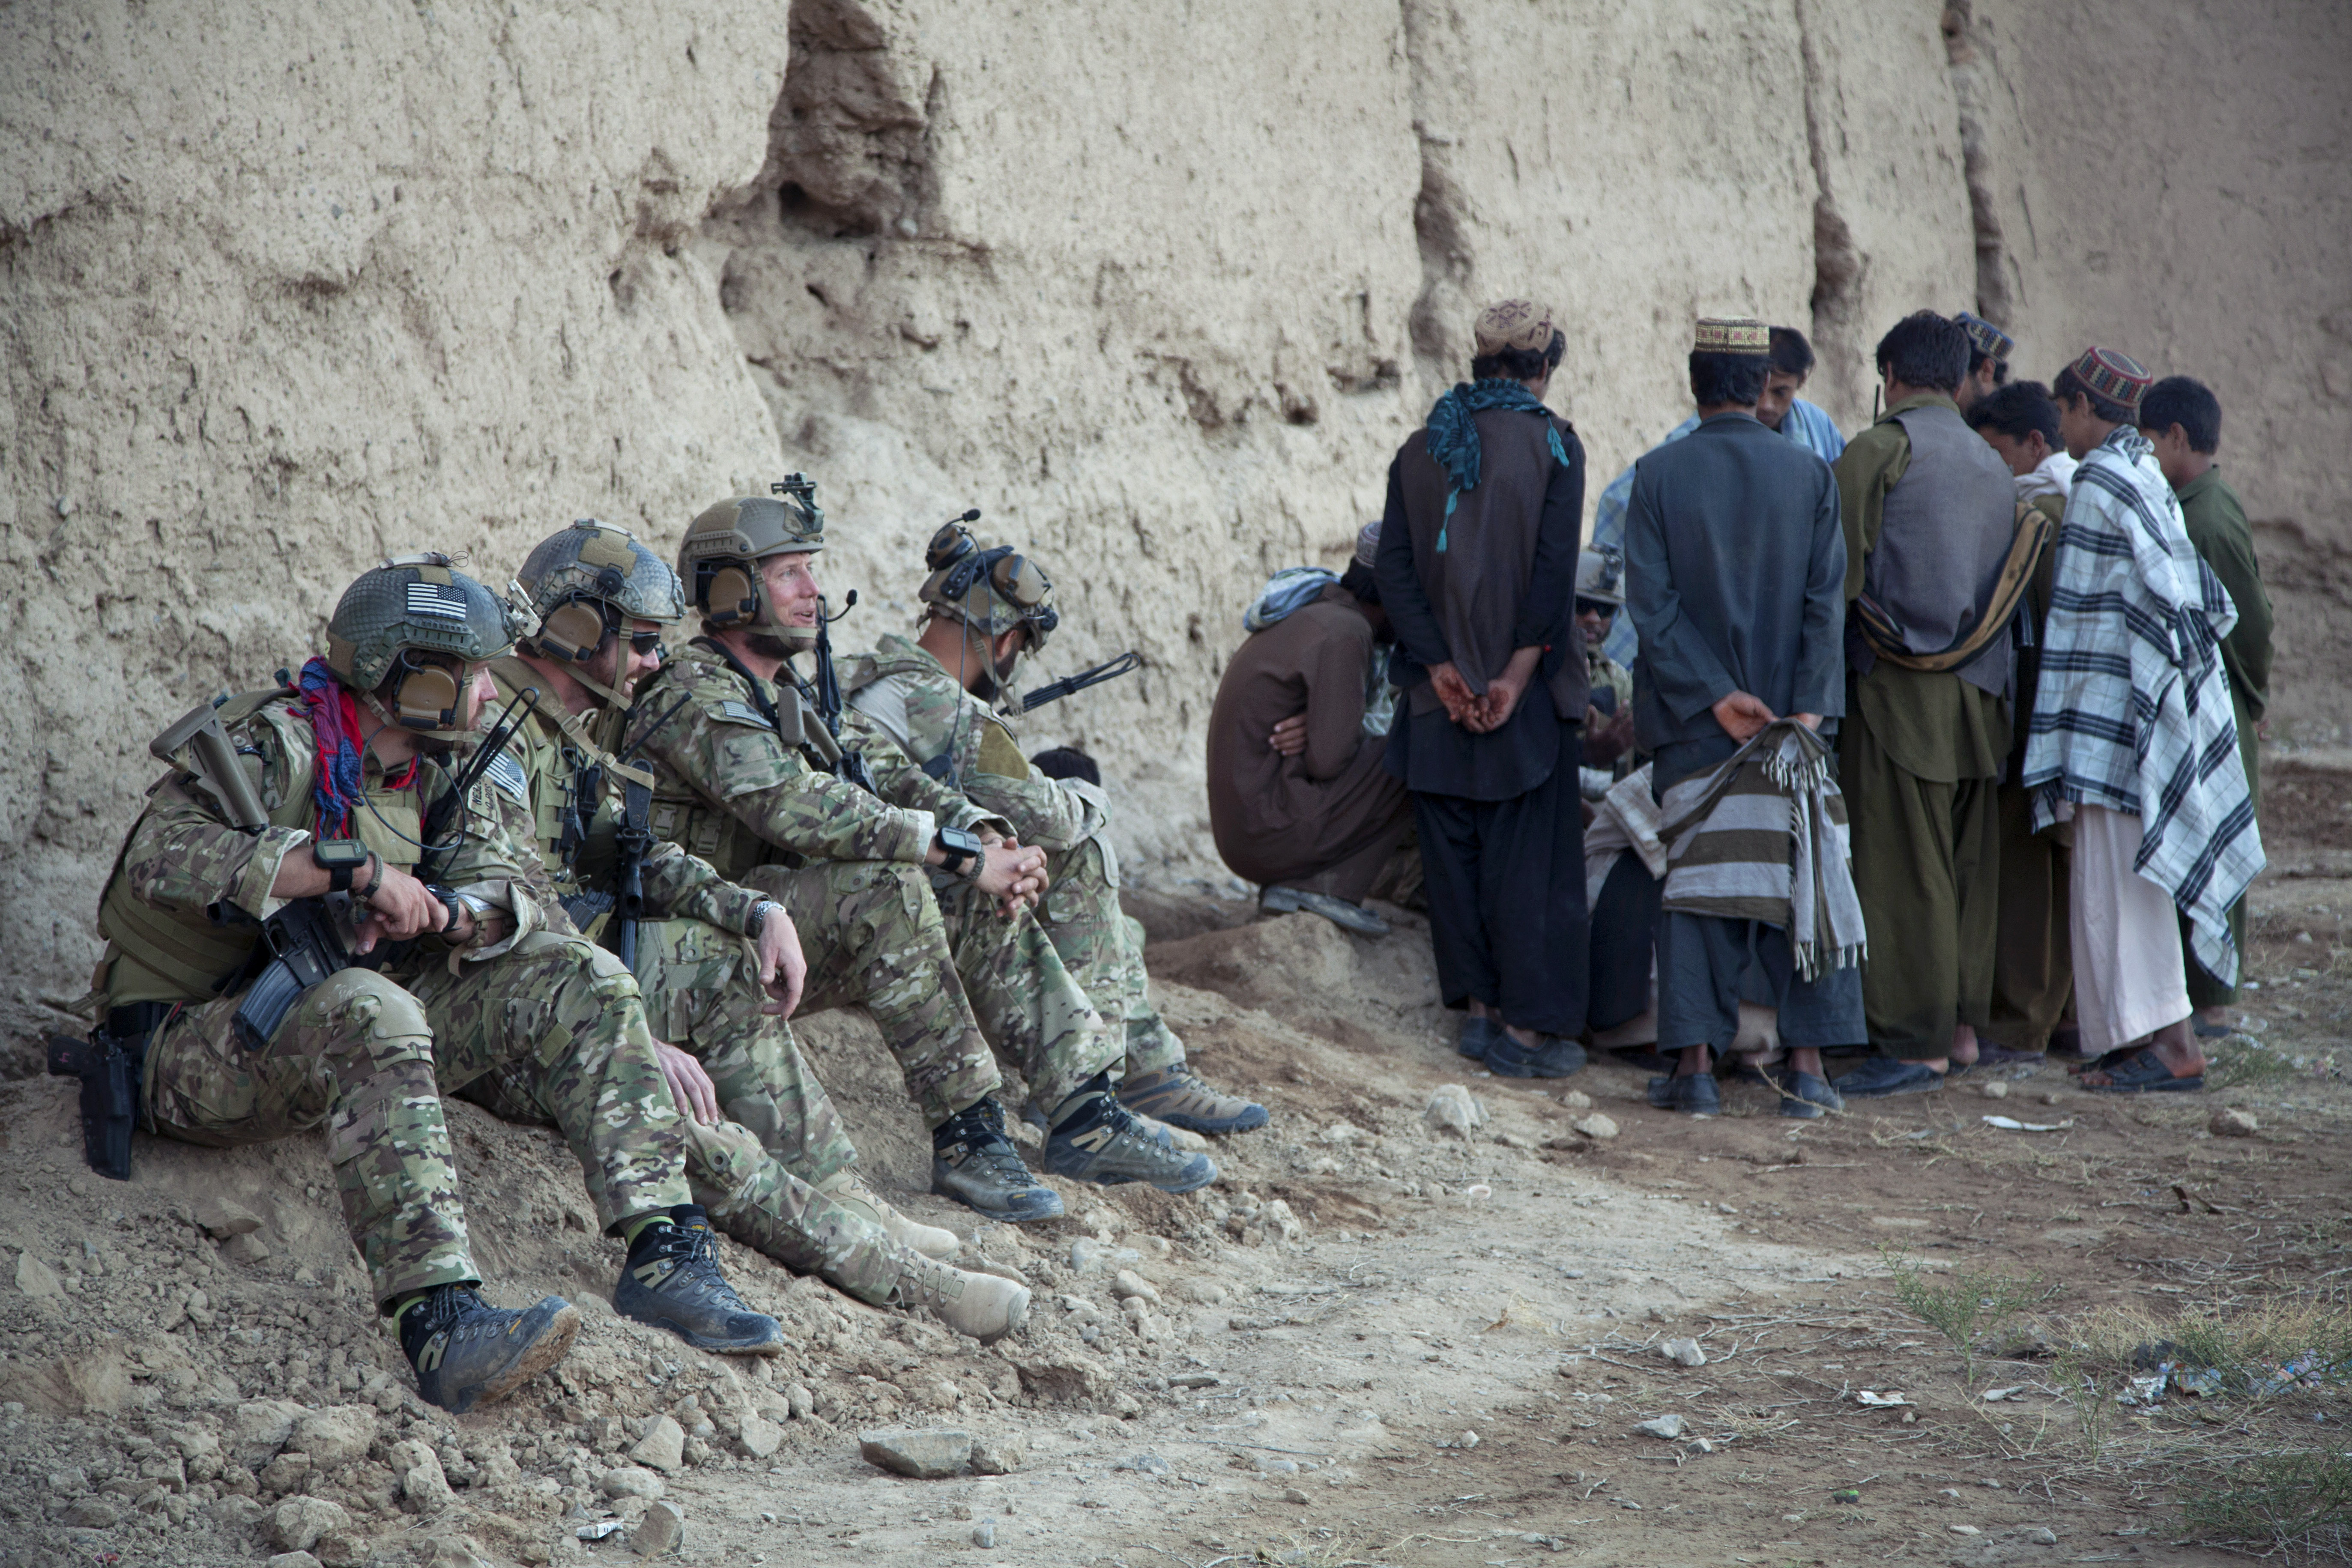 sof-sitting-afghan.jpg